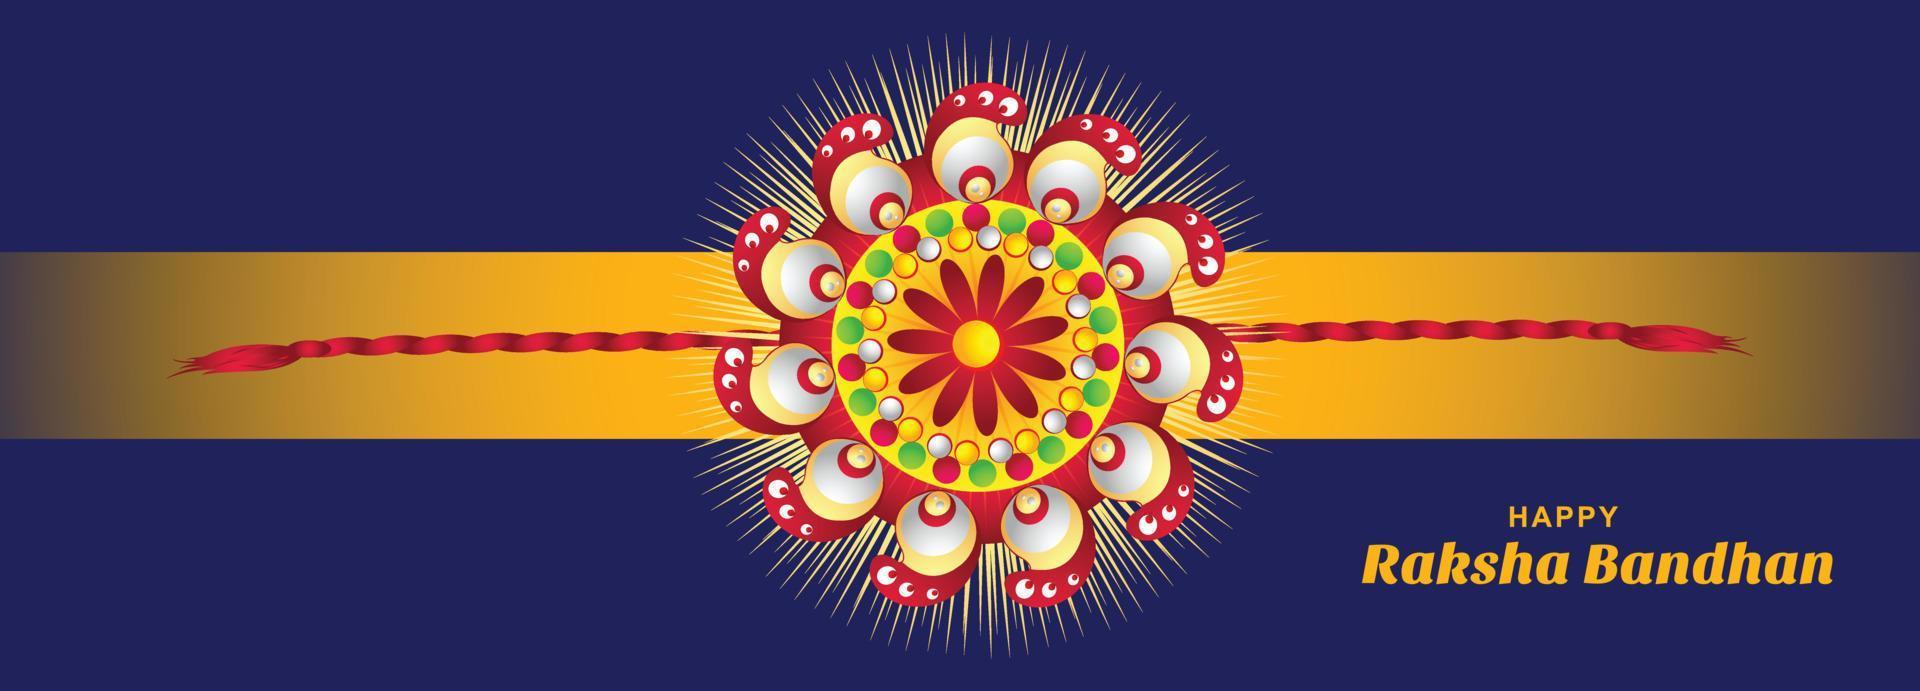 felice raksha bandhan sul design decorativo della bandiera della carta del festival rakhi vettore